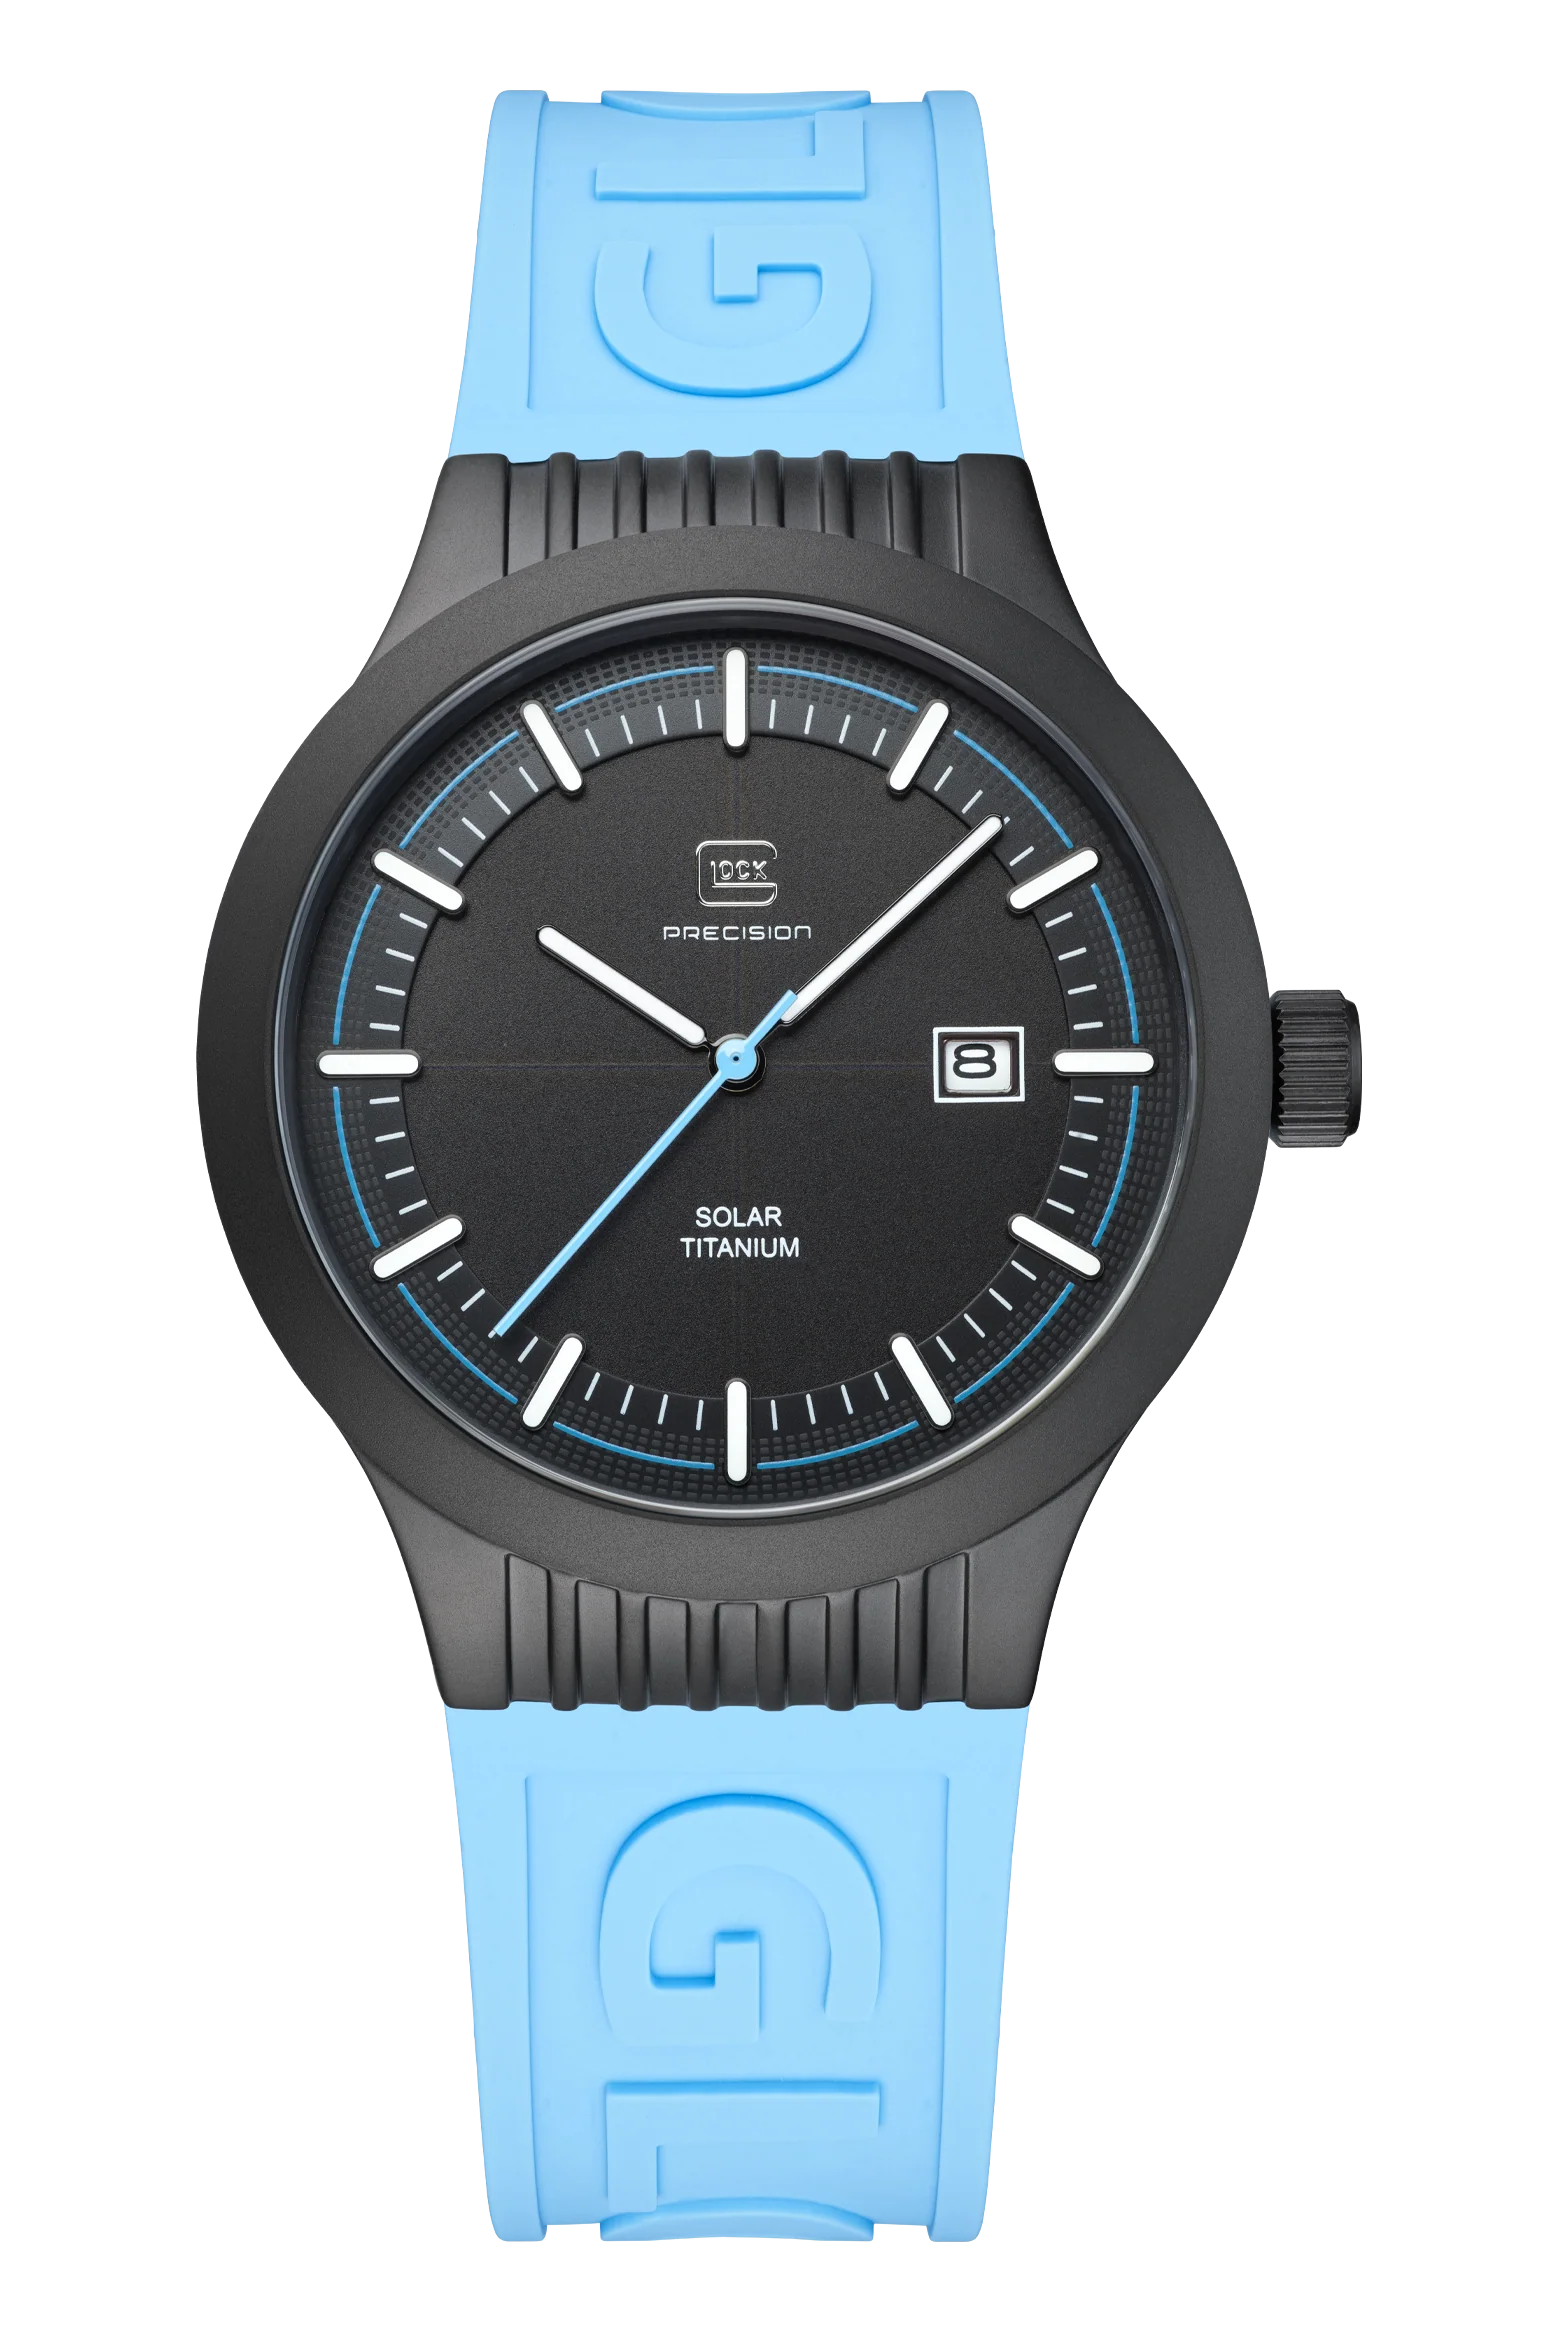 Black Titanium Water resistance Glock Watch